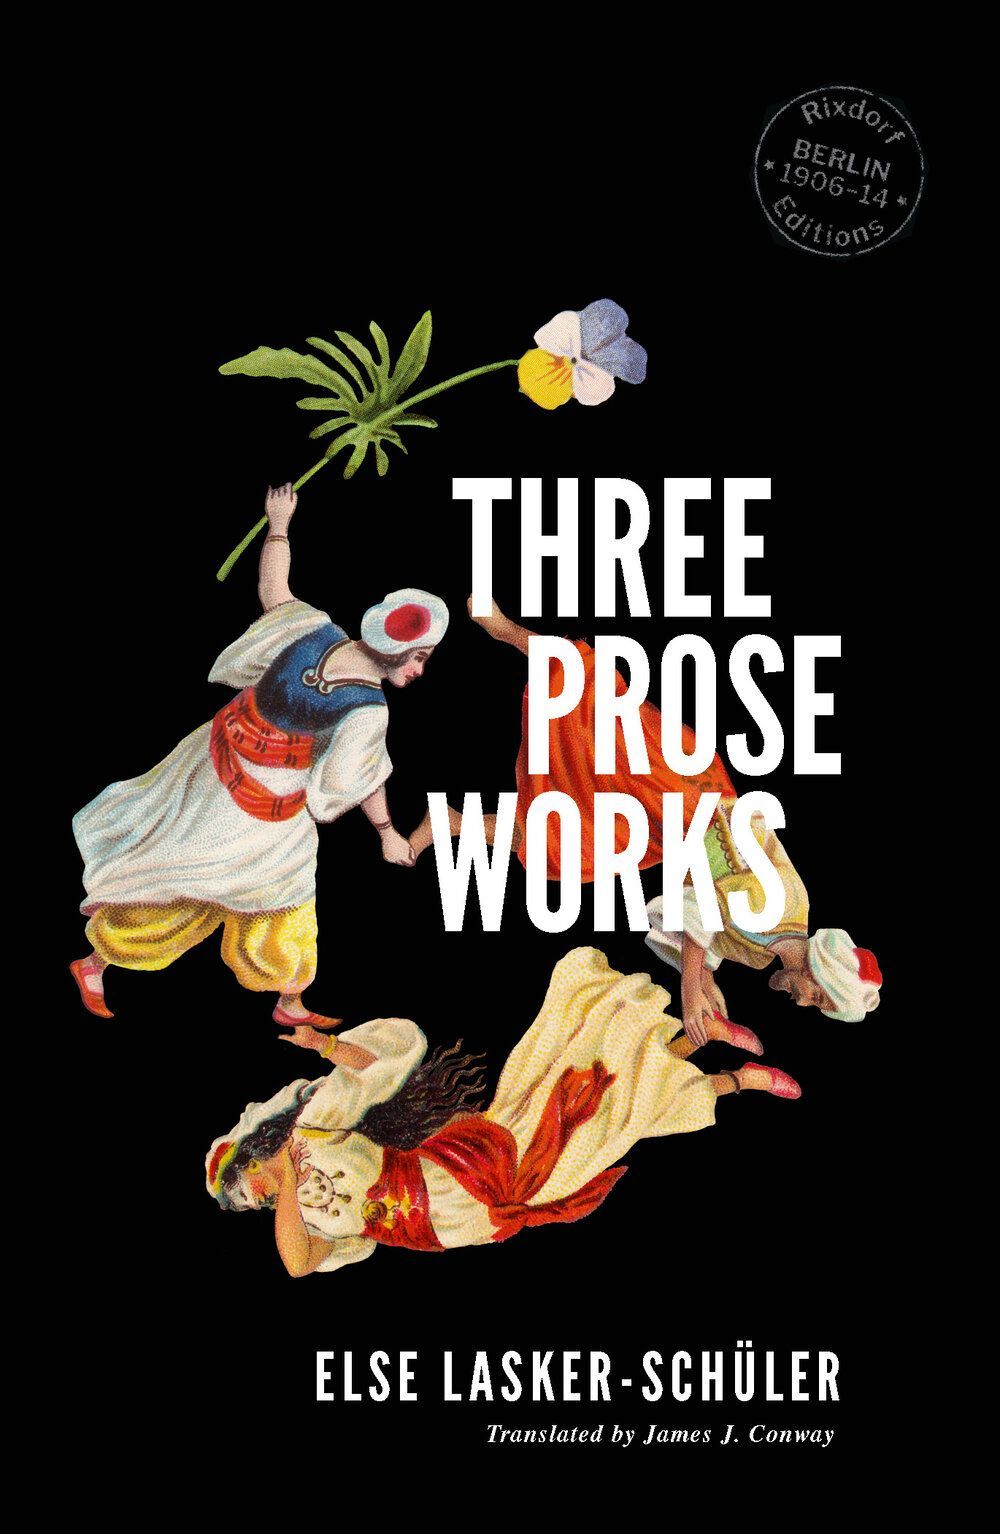 The Name of the World: On Else Lasker-Schüler’s “Three Prose Works”